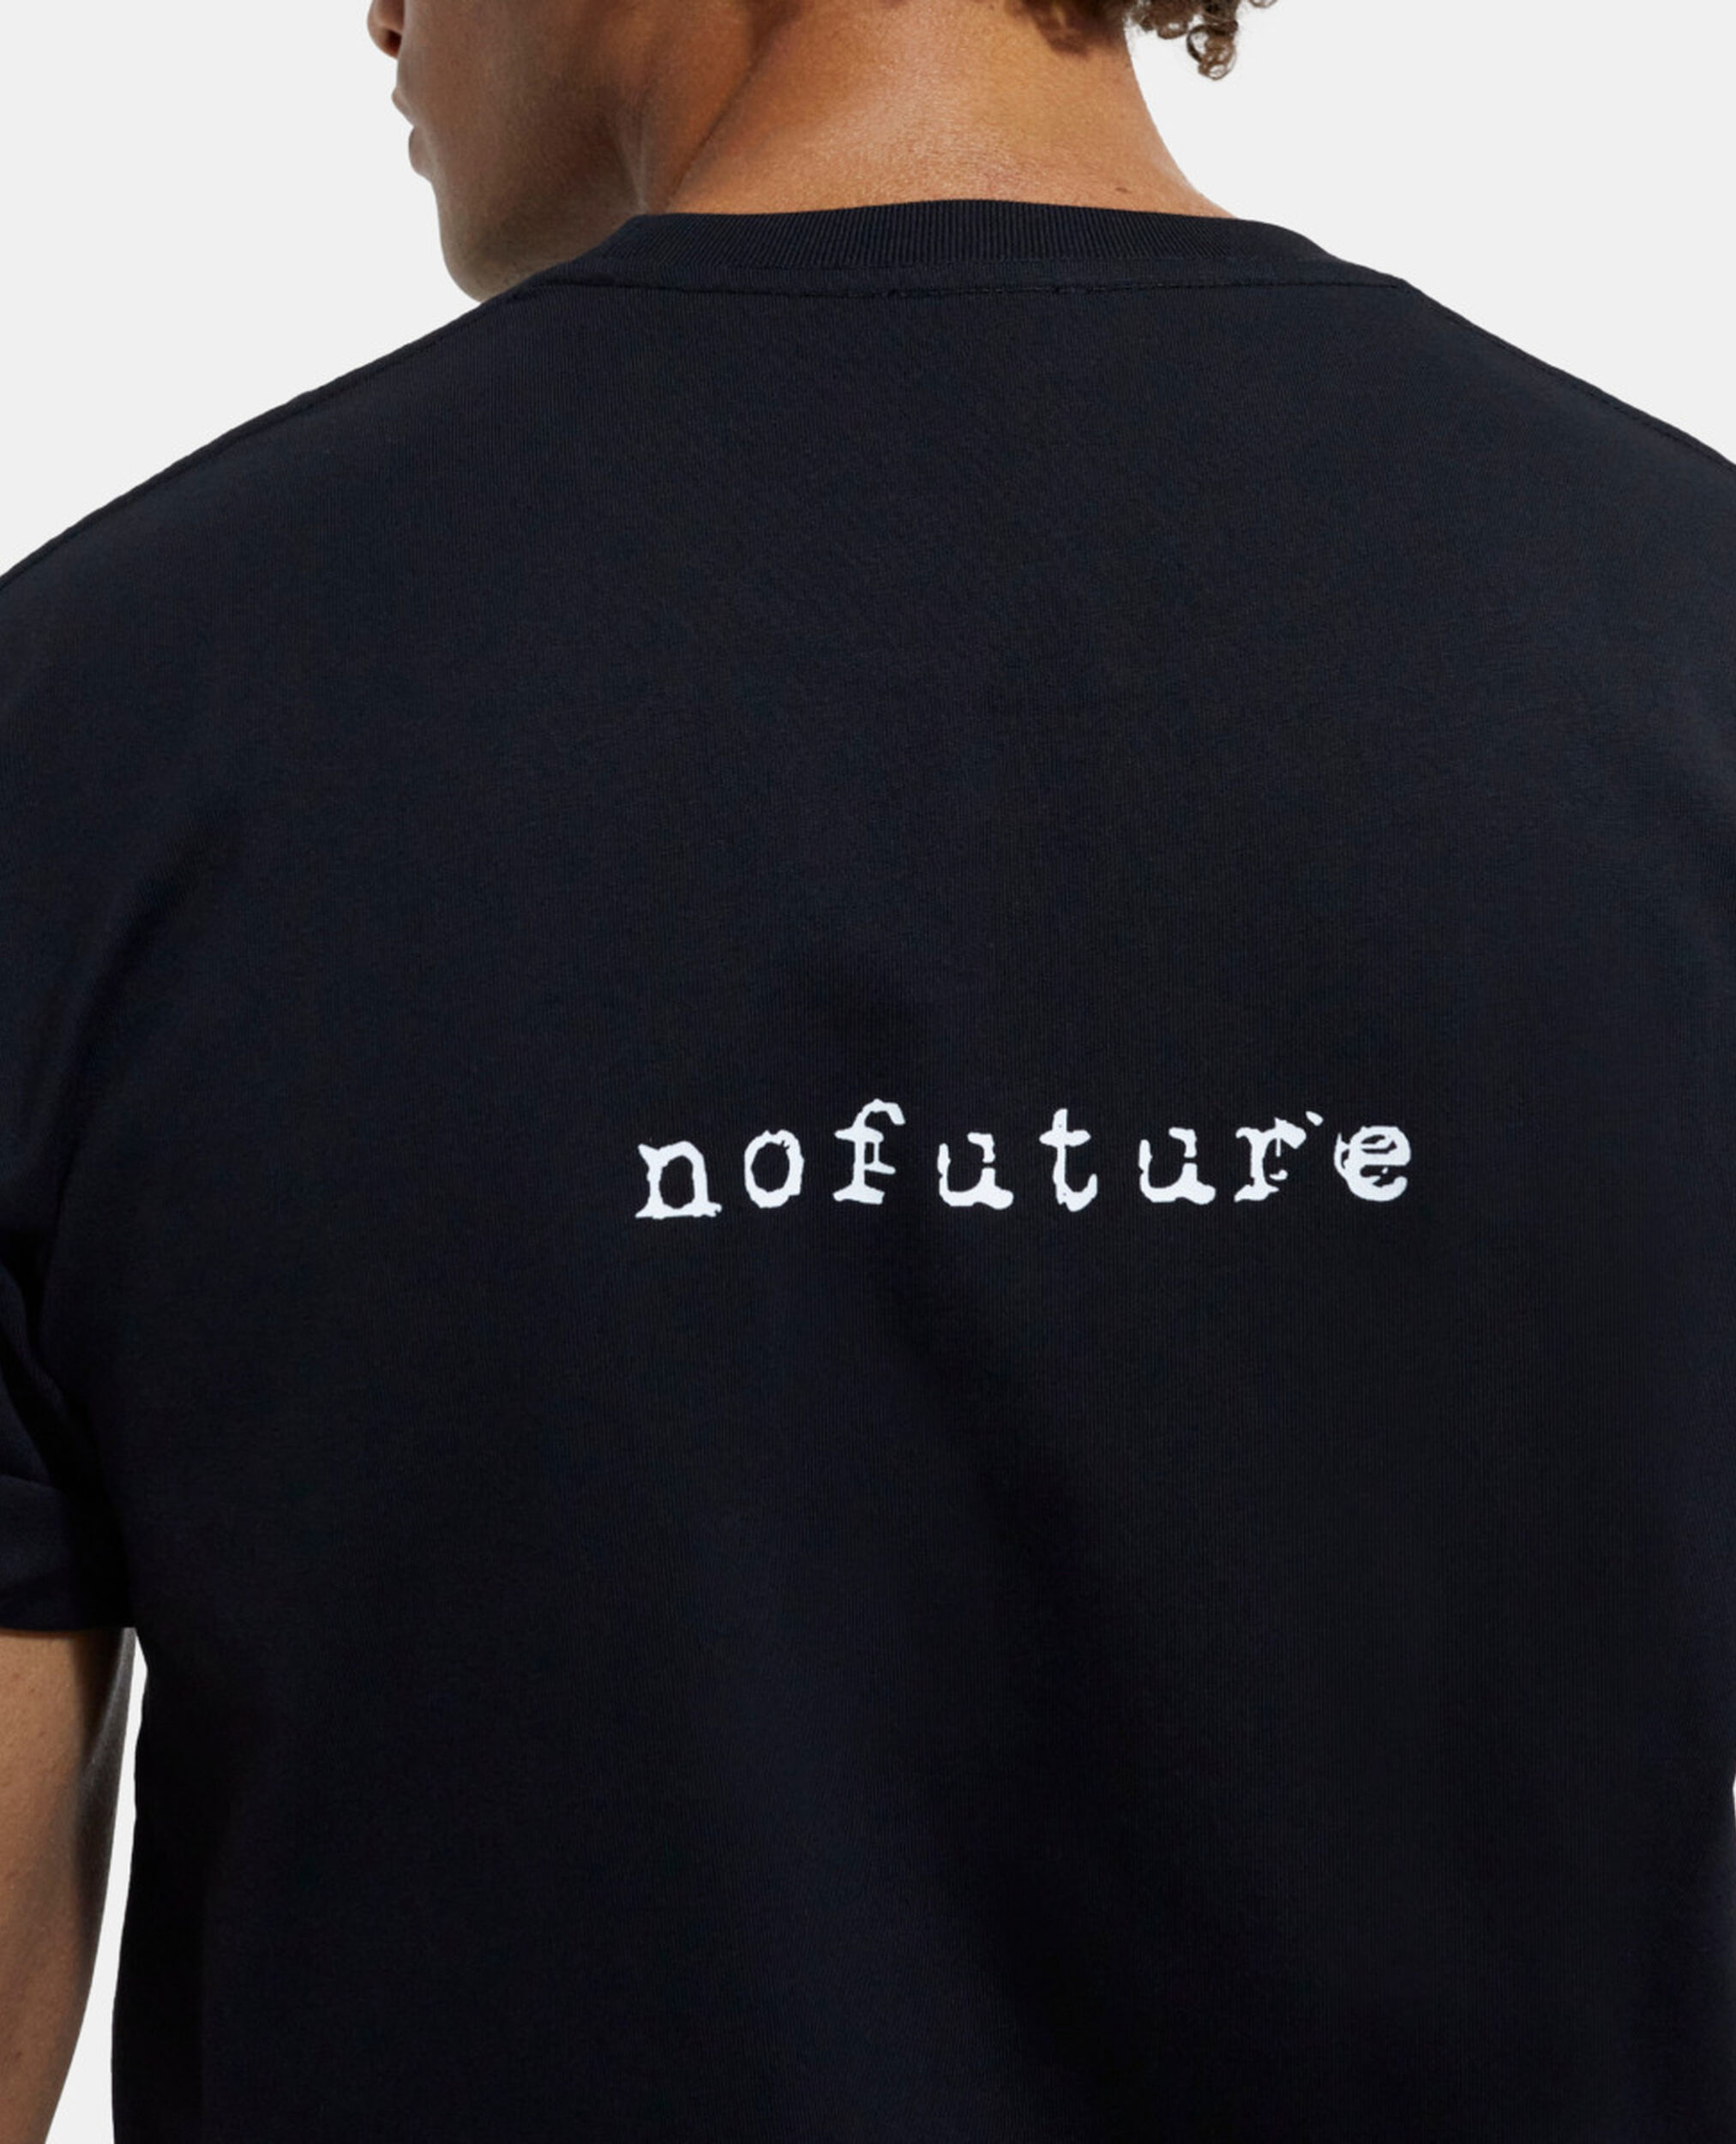 Camiseta logotipo #nokooplesnofuture negra, BLACK, hi-res image number null